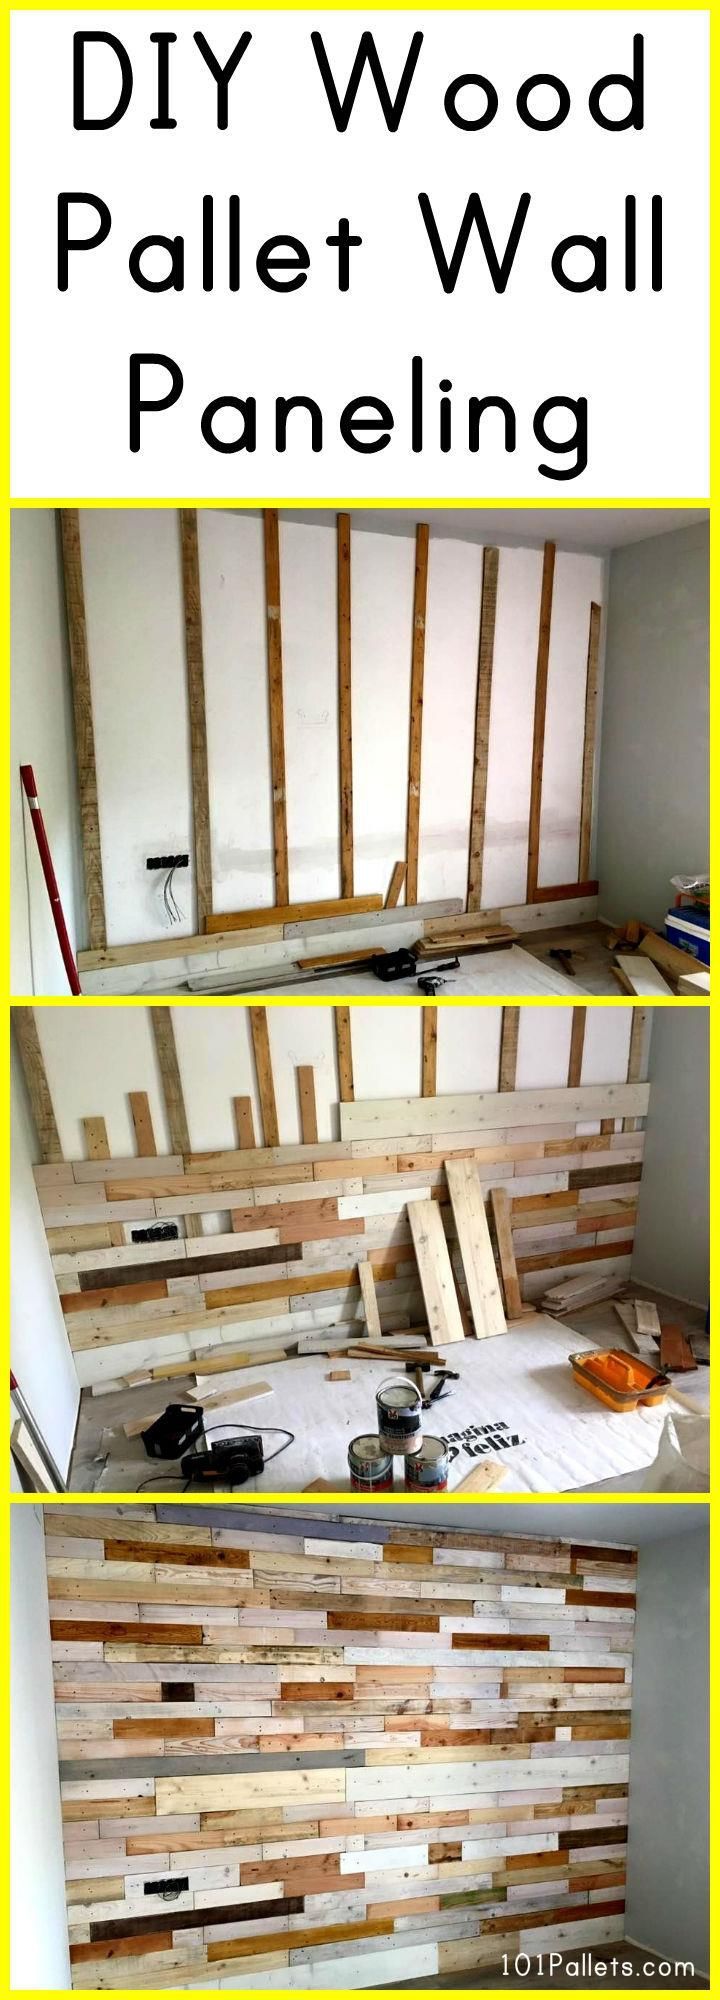 DIY Wood Pallet Wall Paneling